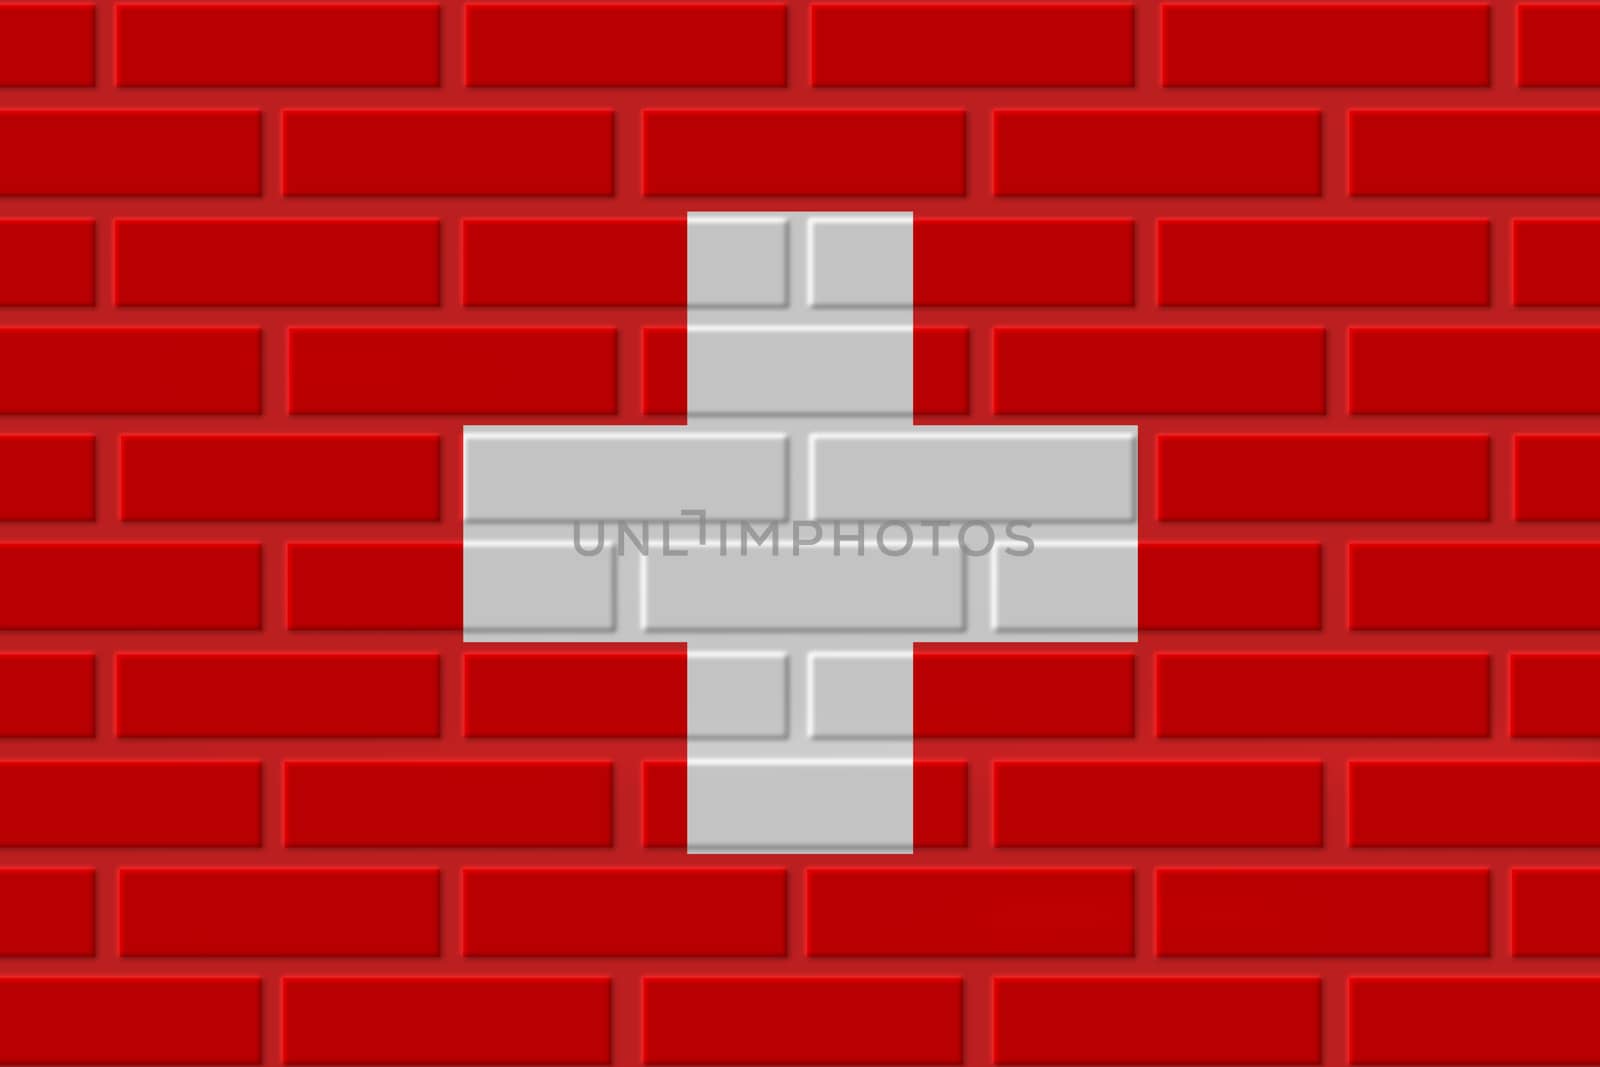 Switzerland brick flag illustration by Visual-Content